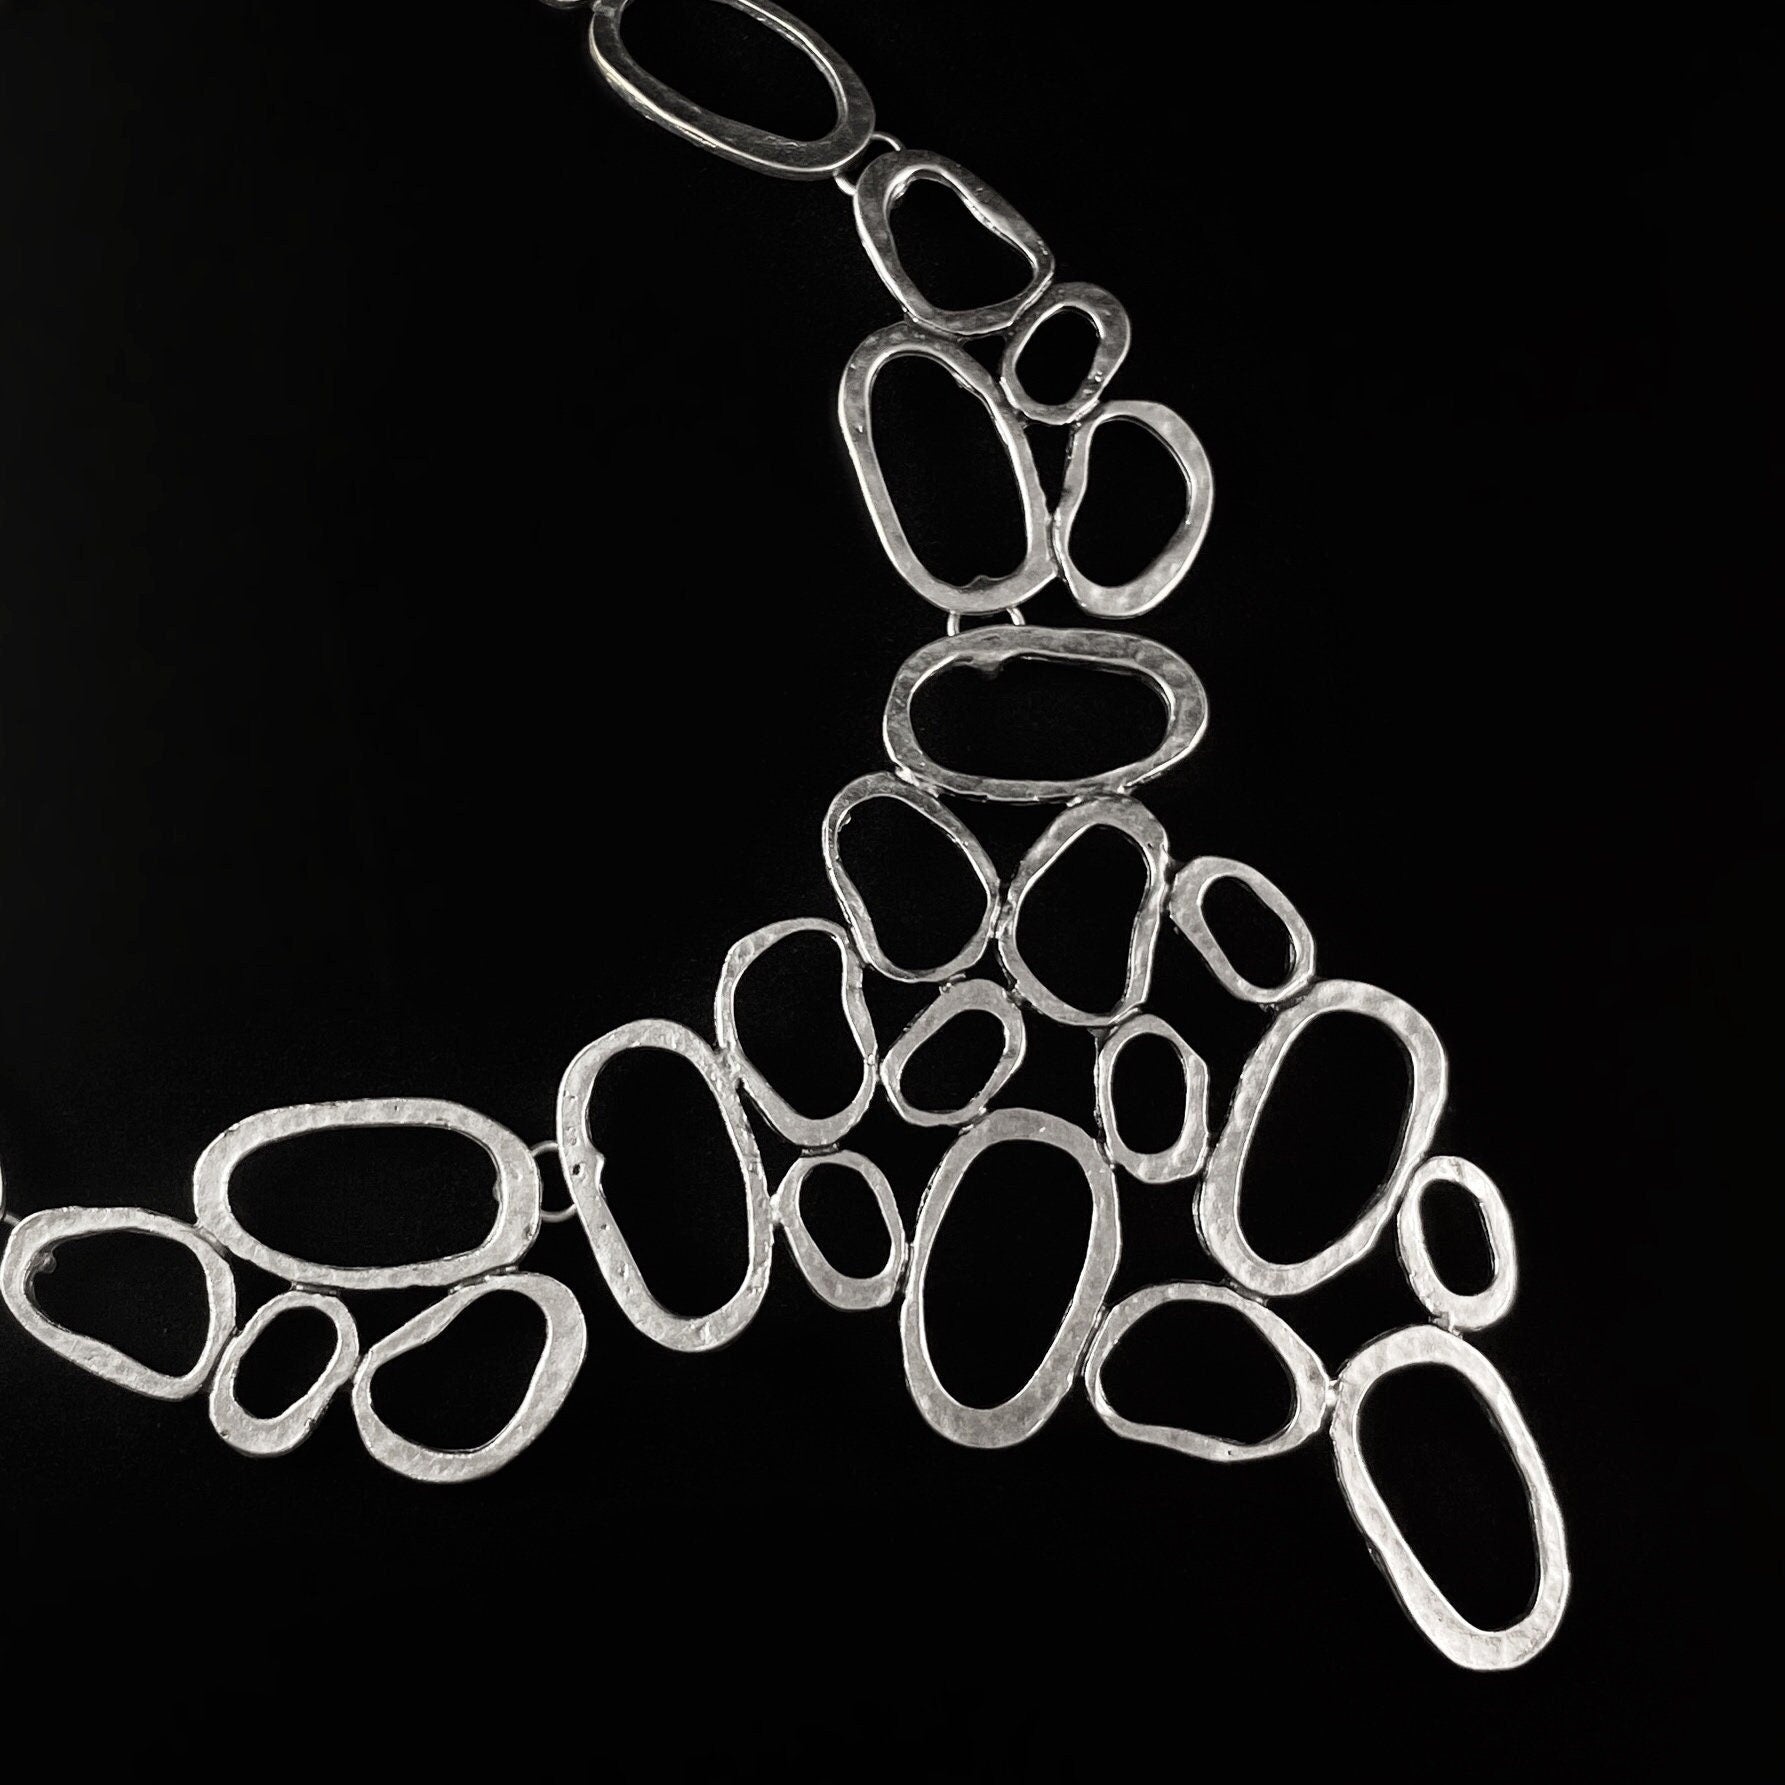 Flowing Silver Oval Statement Necklace, Handmade, Nickel Free-Noir